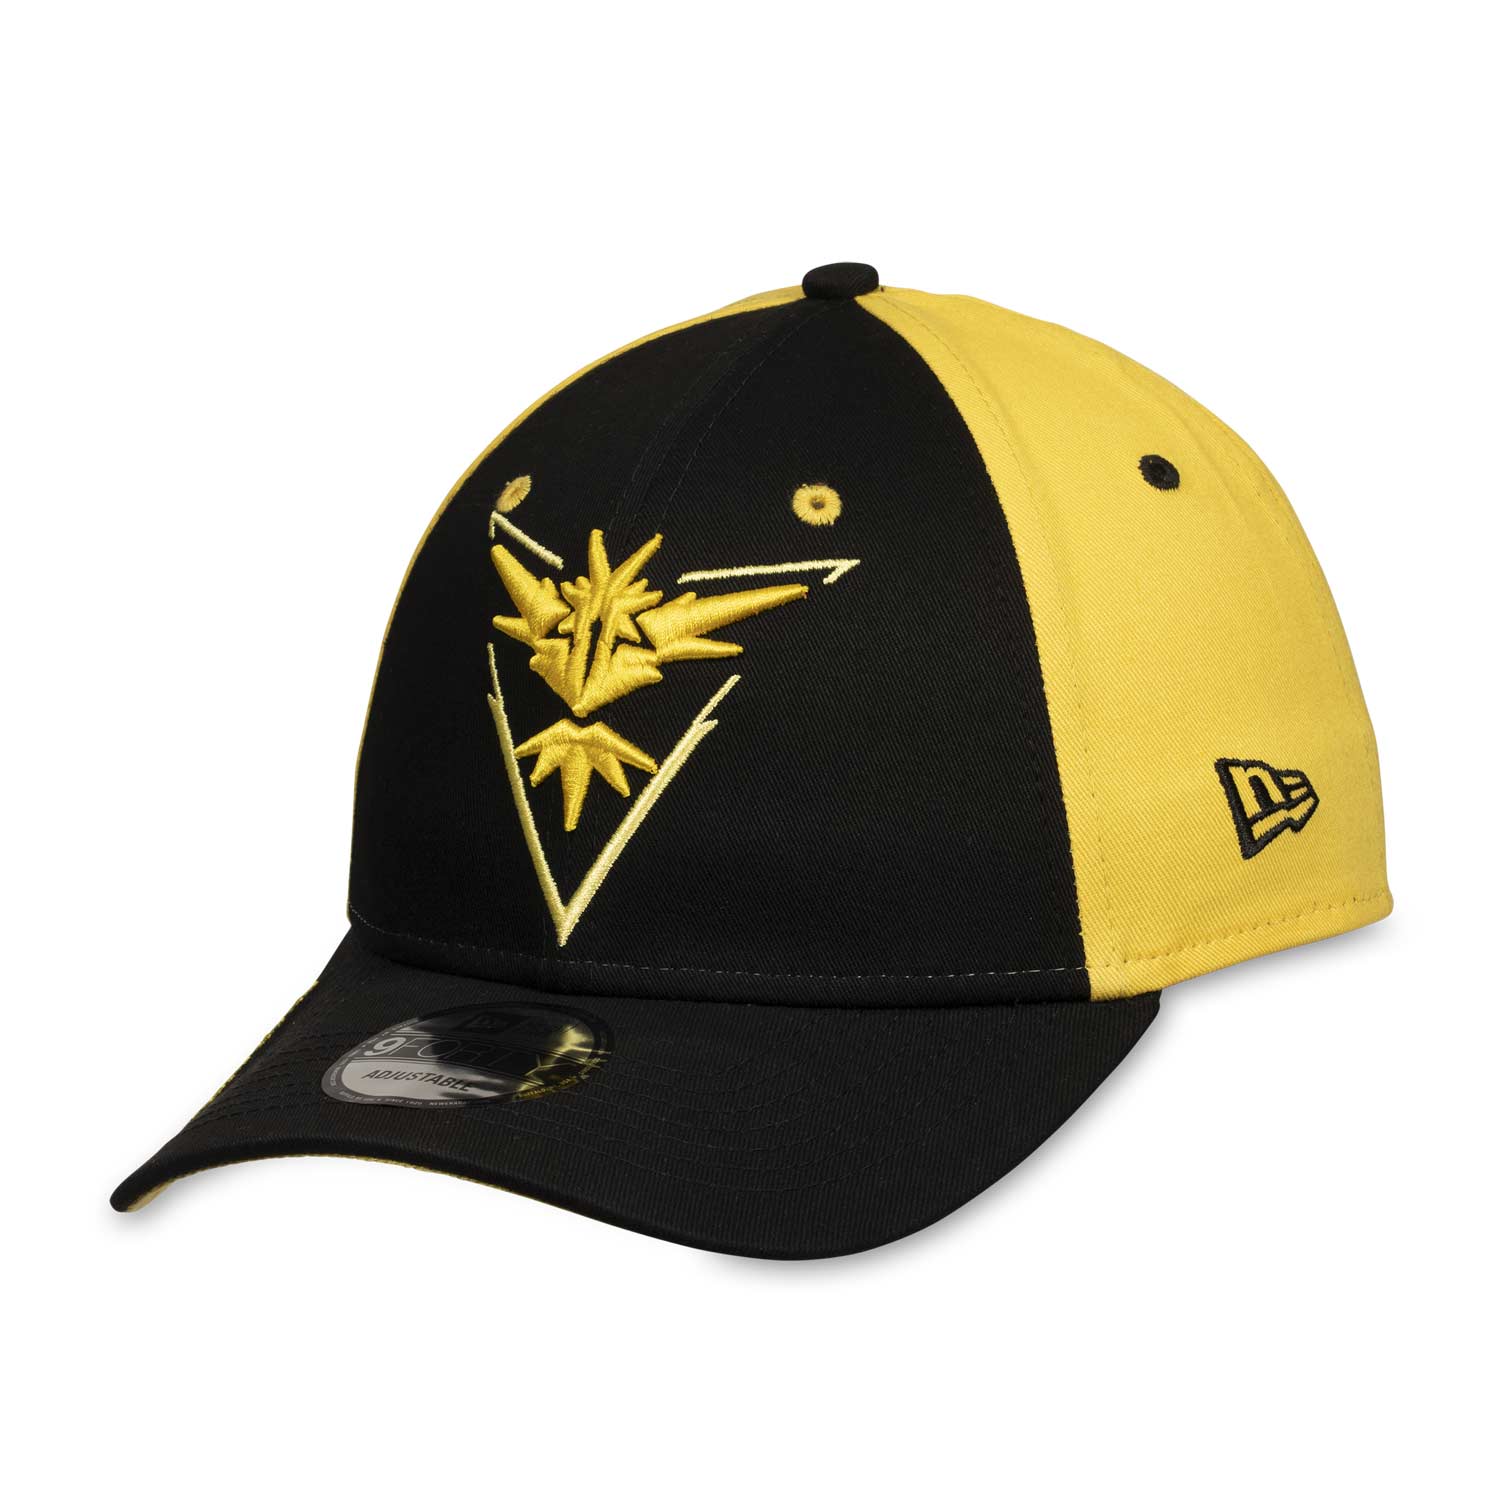 Pokemon Go Team Cartridge Hat Pin Set Limited Edition Black on Gold